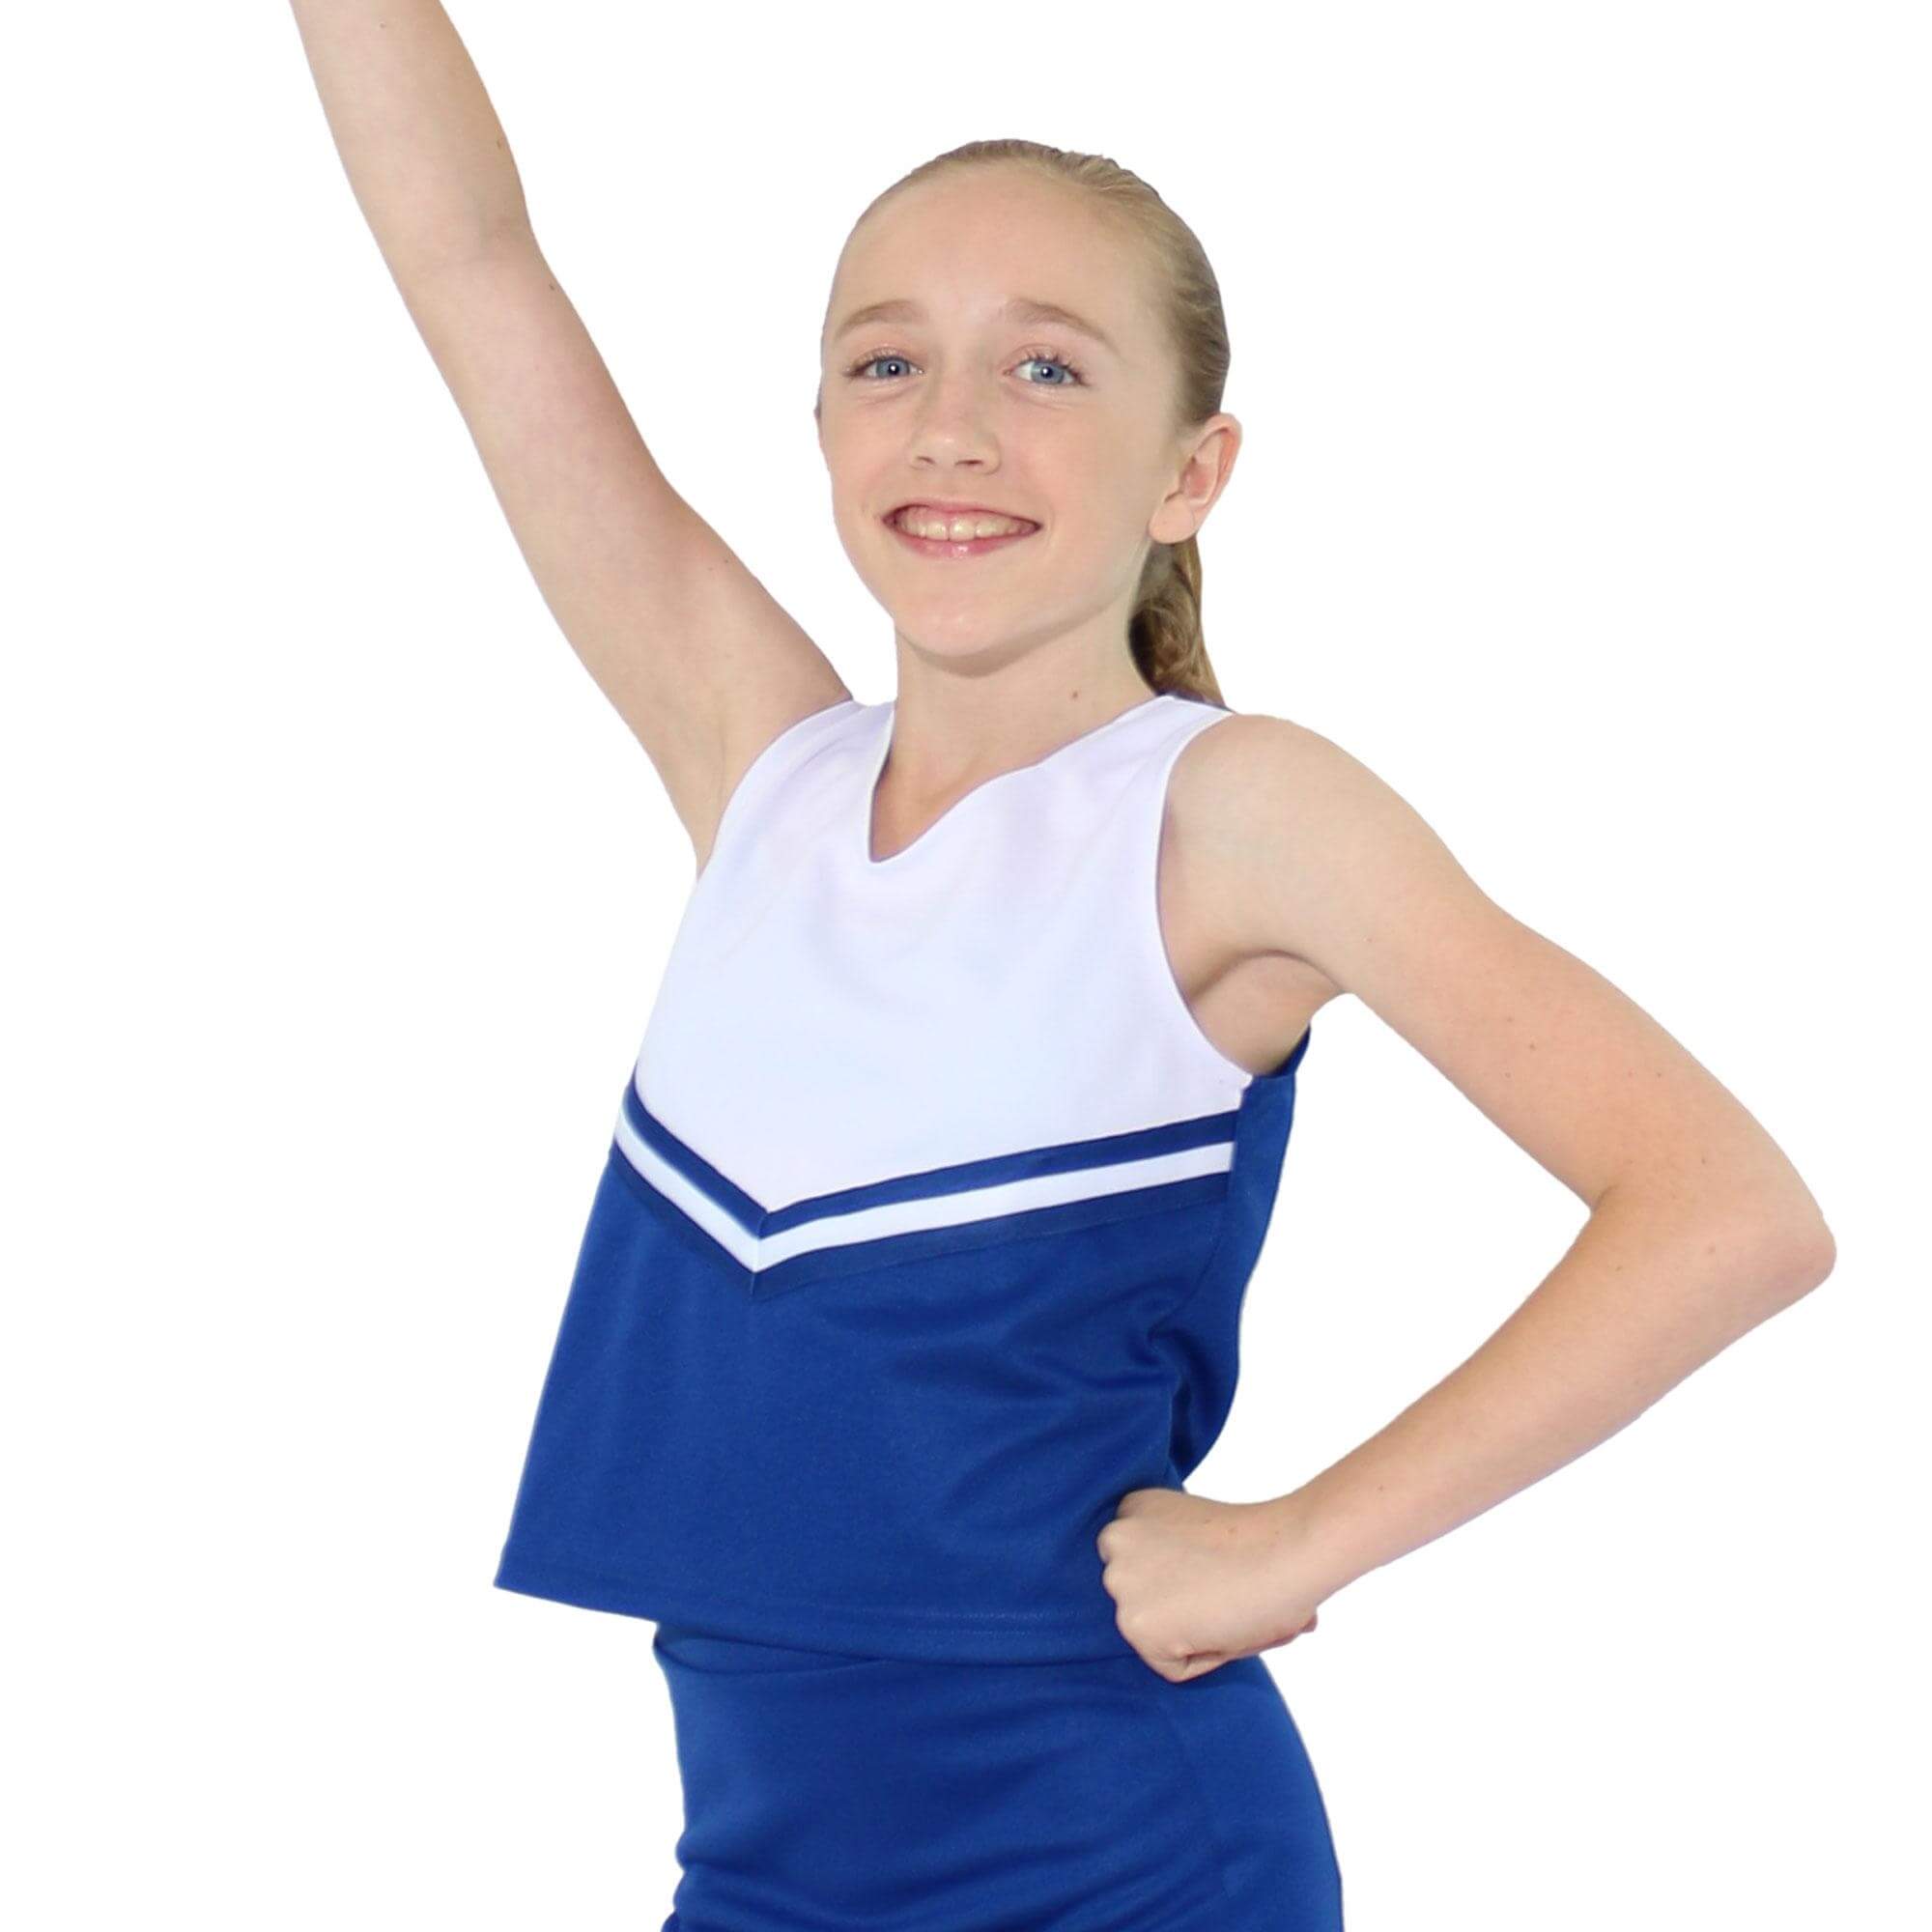 Danzcue Girls V-Neck Cheerleaders Uniform Shell Top